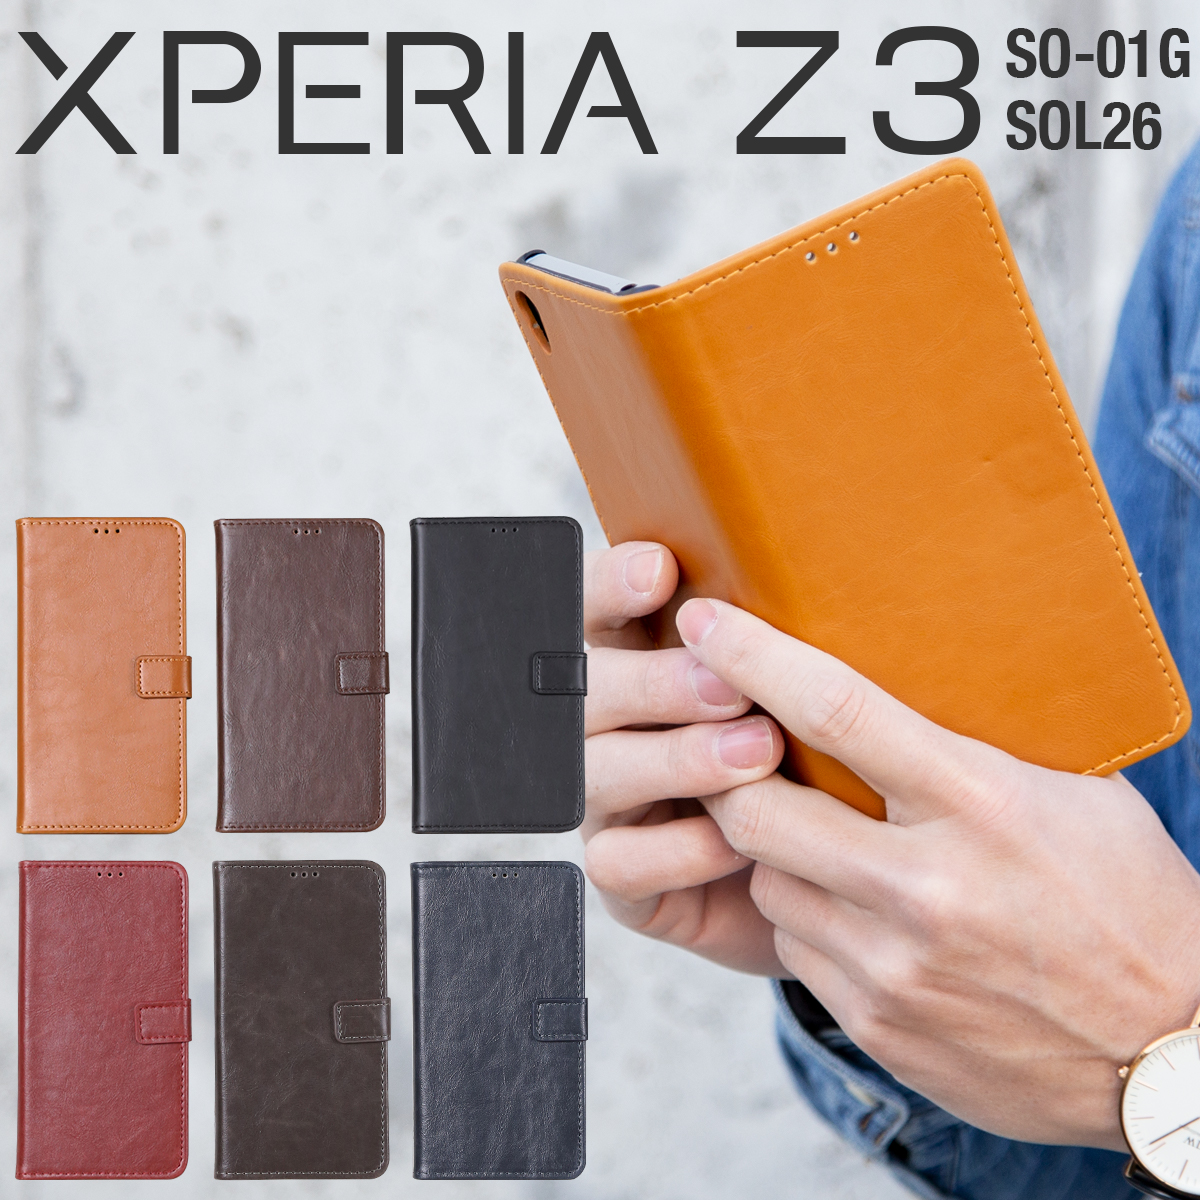 Xperia Z3 SO-01G/SOL26 アンティークレザー手帳型ケース